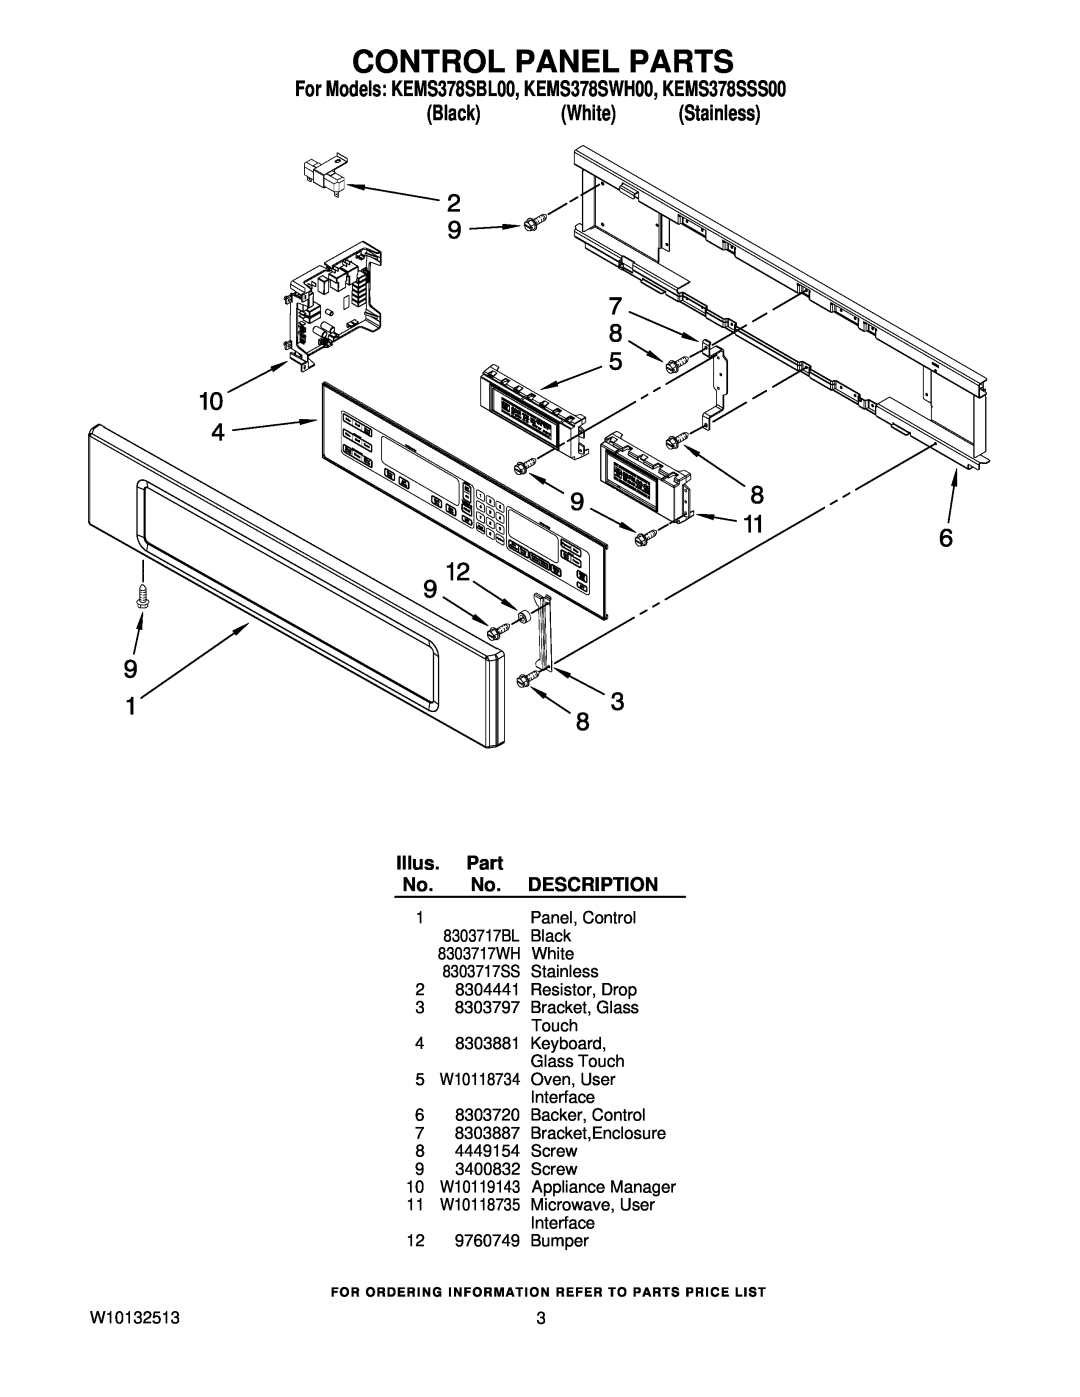 KitchenAid manual Control Panel Parts, For Models KEMS378SBL00, KEMS378SWH00, KEMS378SSS00, Black White Stainless 